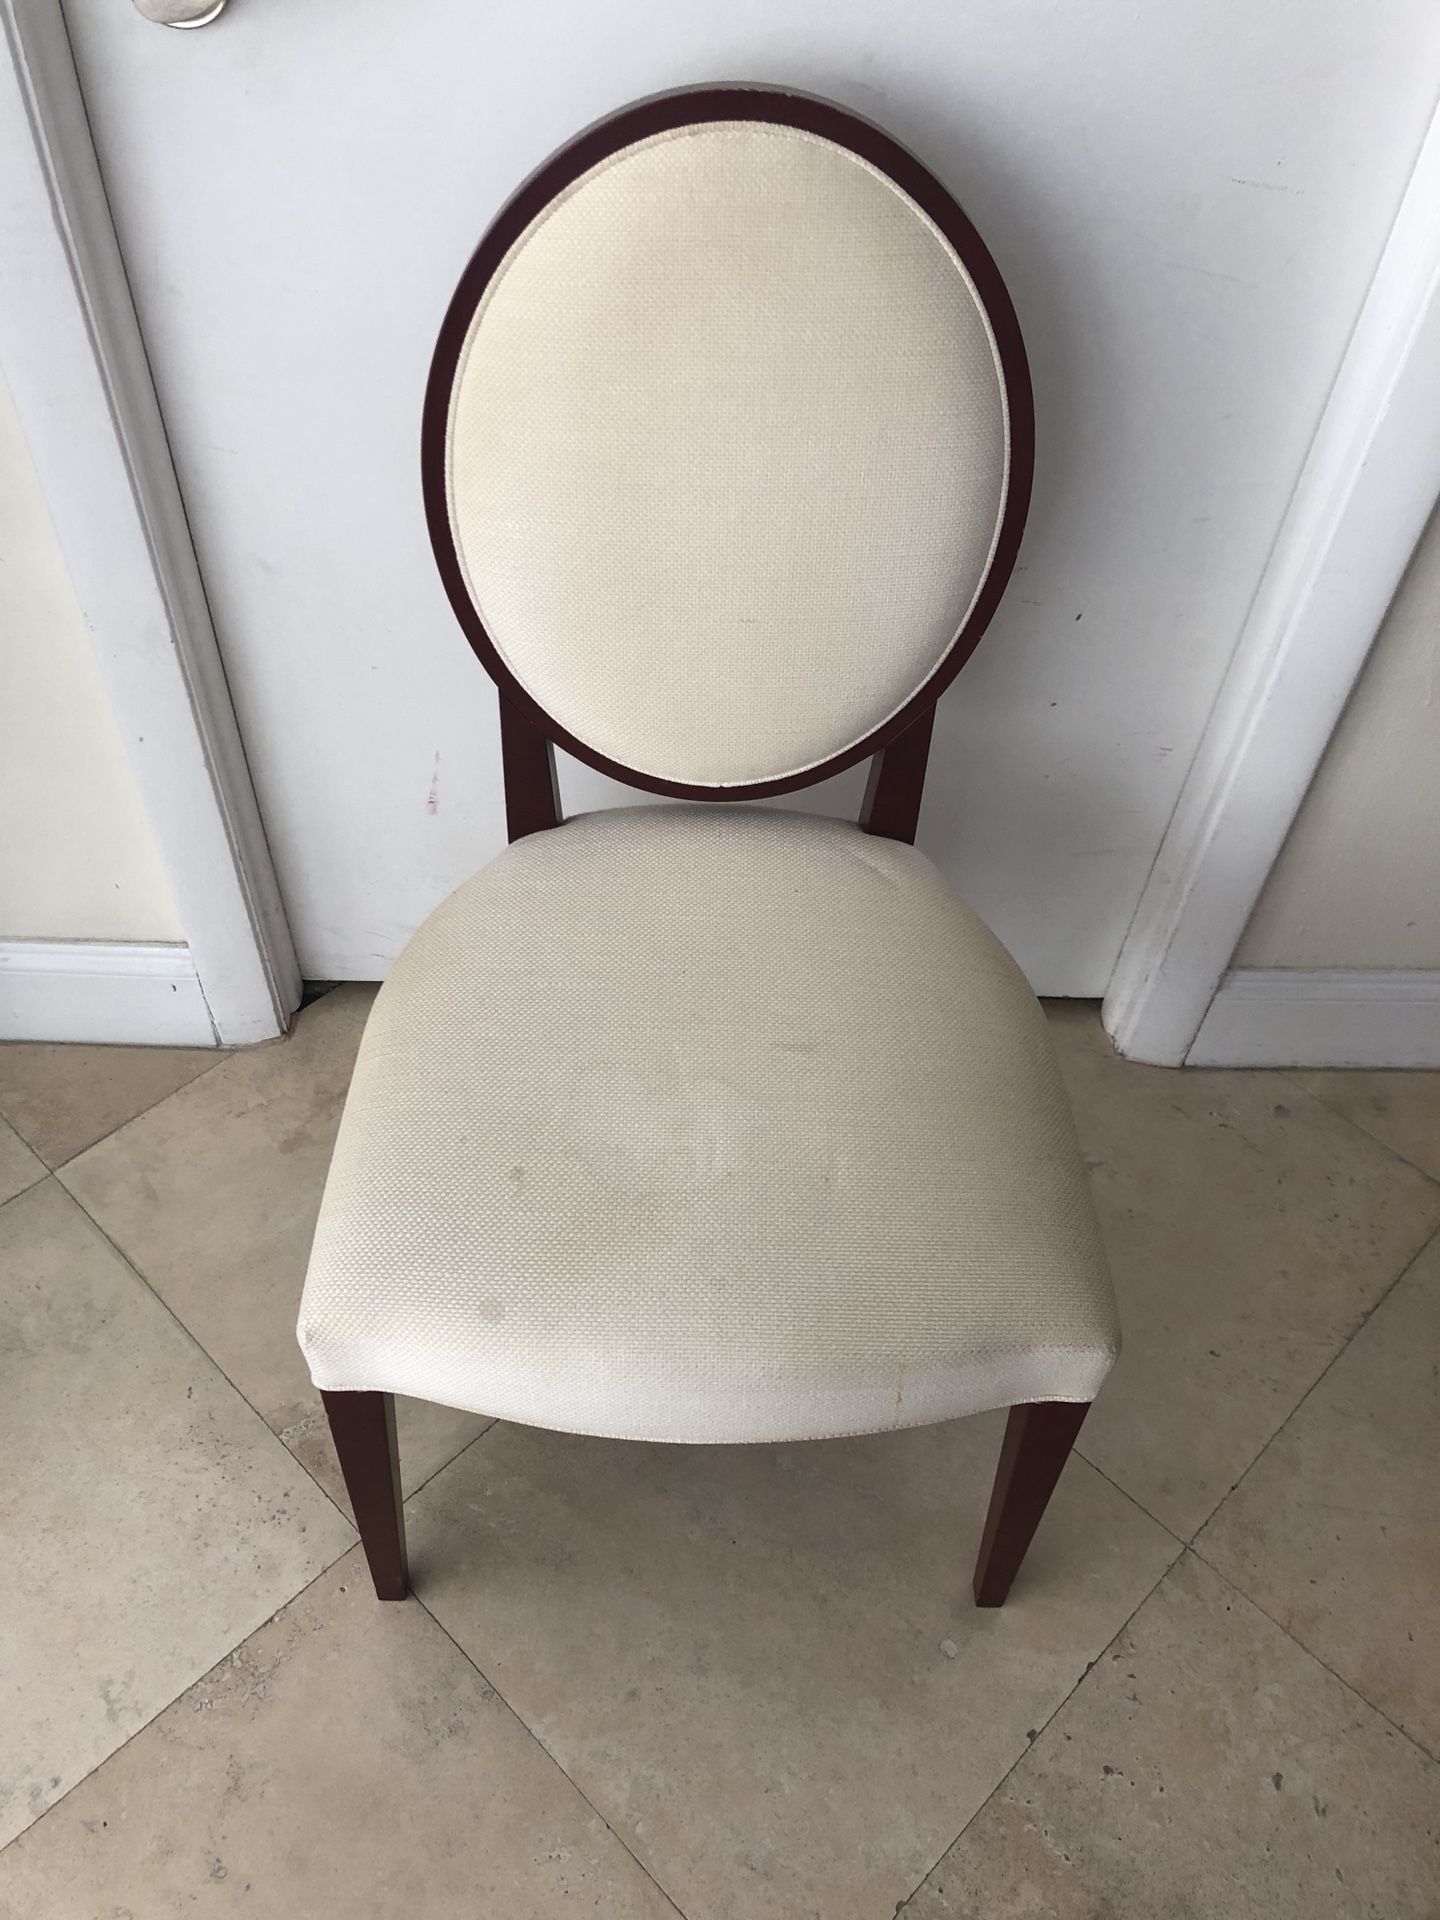 Cream fabric and cherry wood chair